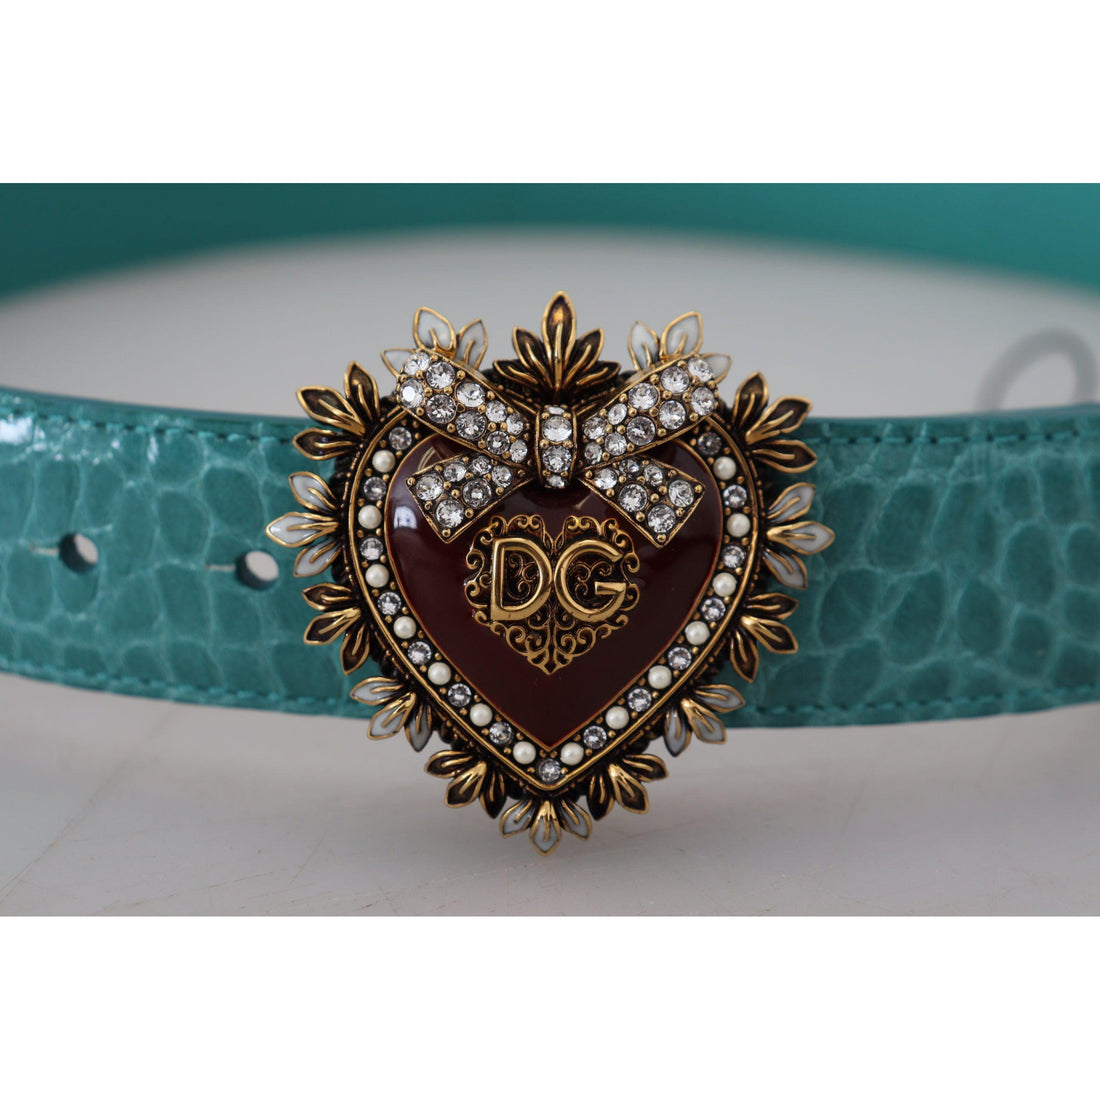 Dolce & Gabbana Blue Leather Gold DEVOTION Heart Buckle Belt